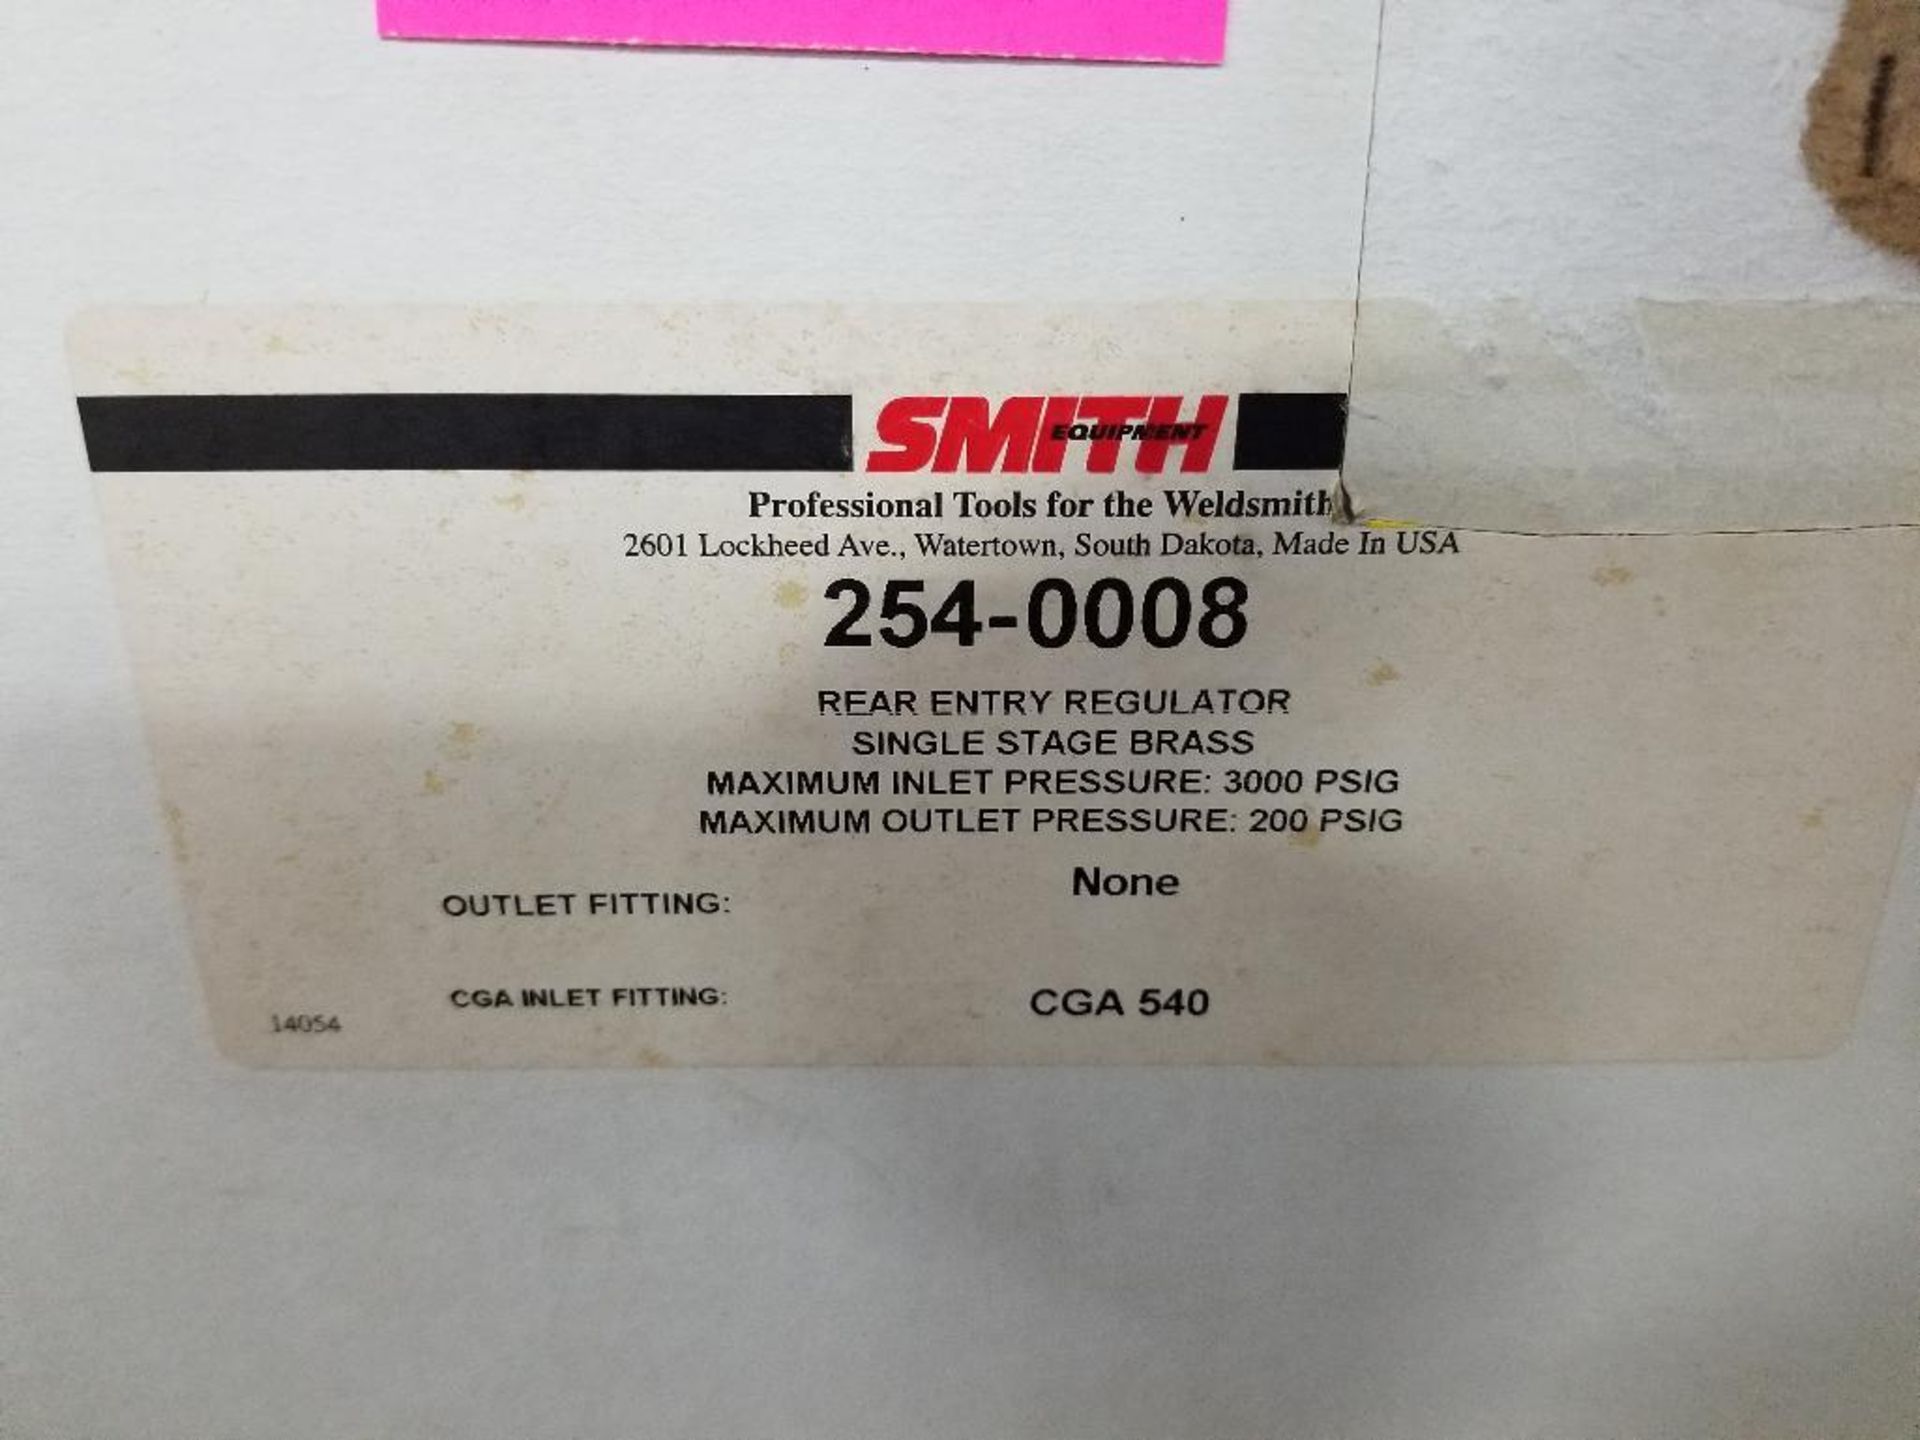 Smith Equipment 254-0008 Single stage brass rear entry regulator.